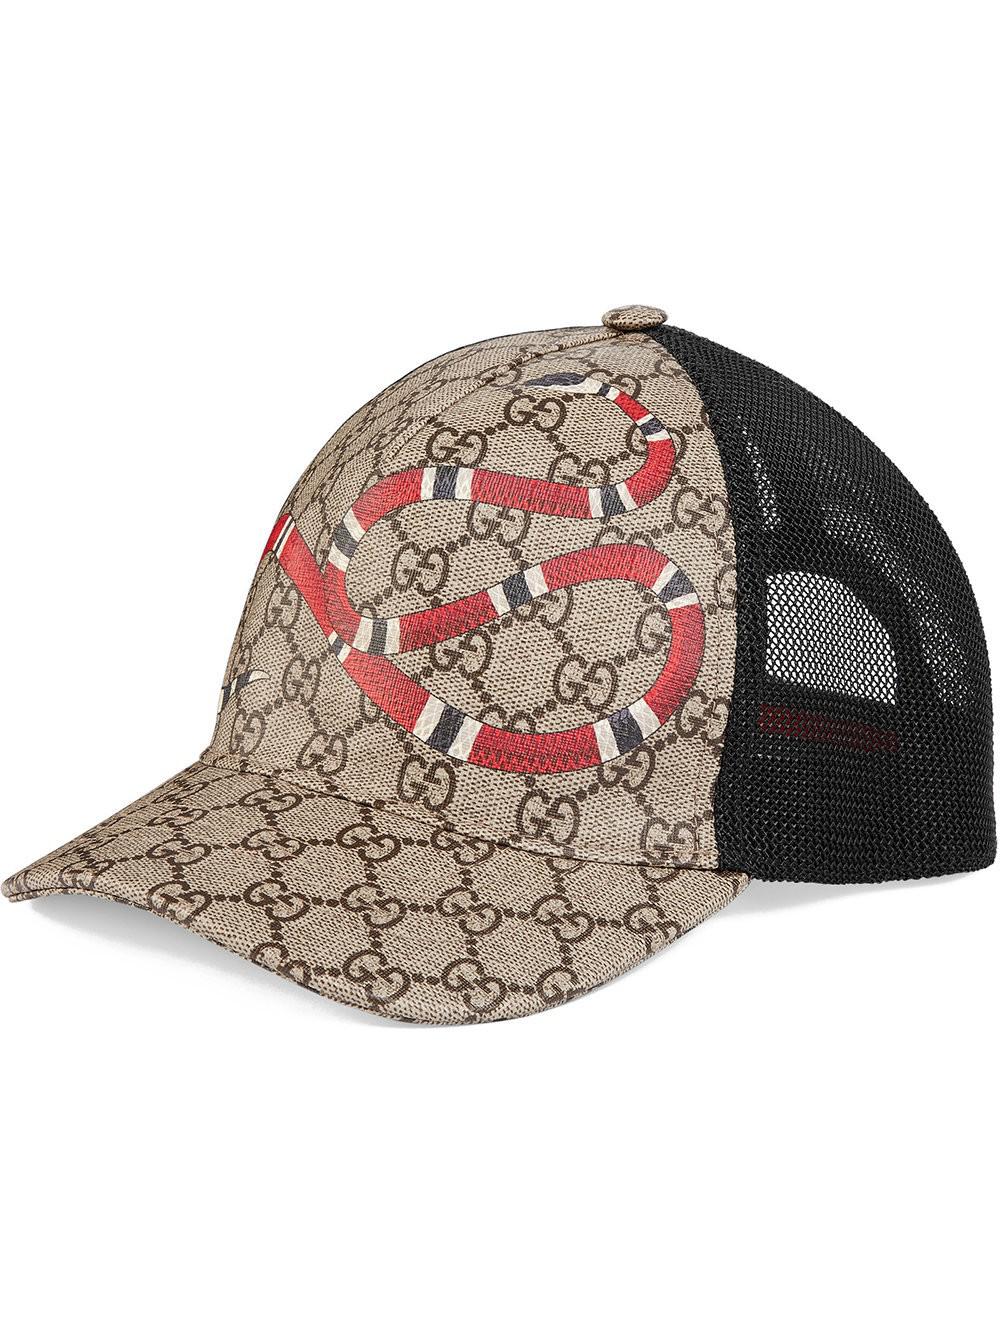 gucci snake hat